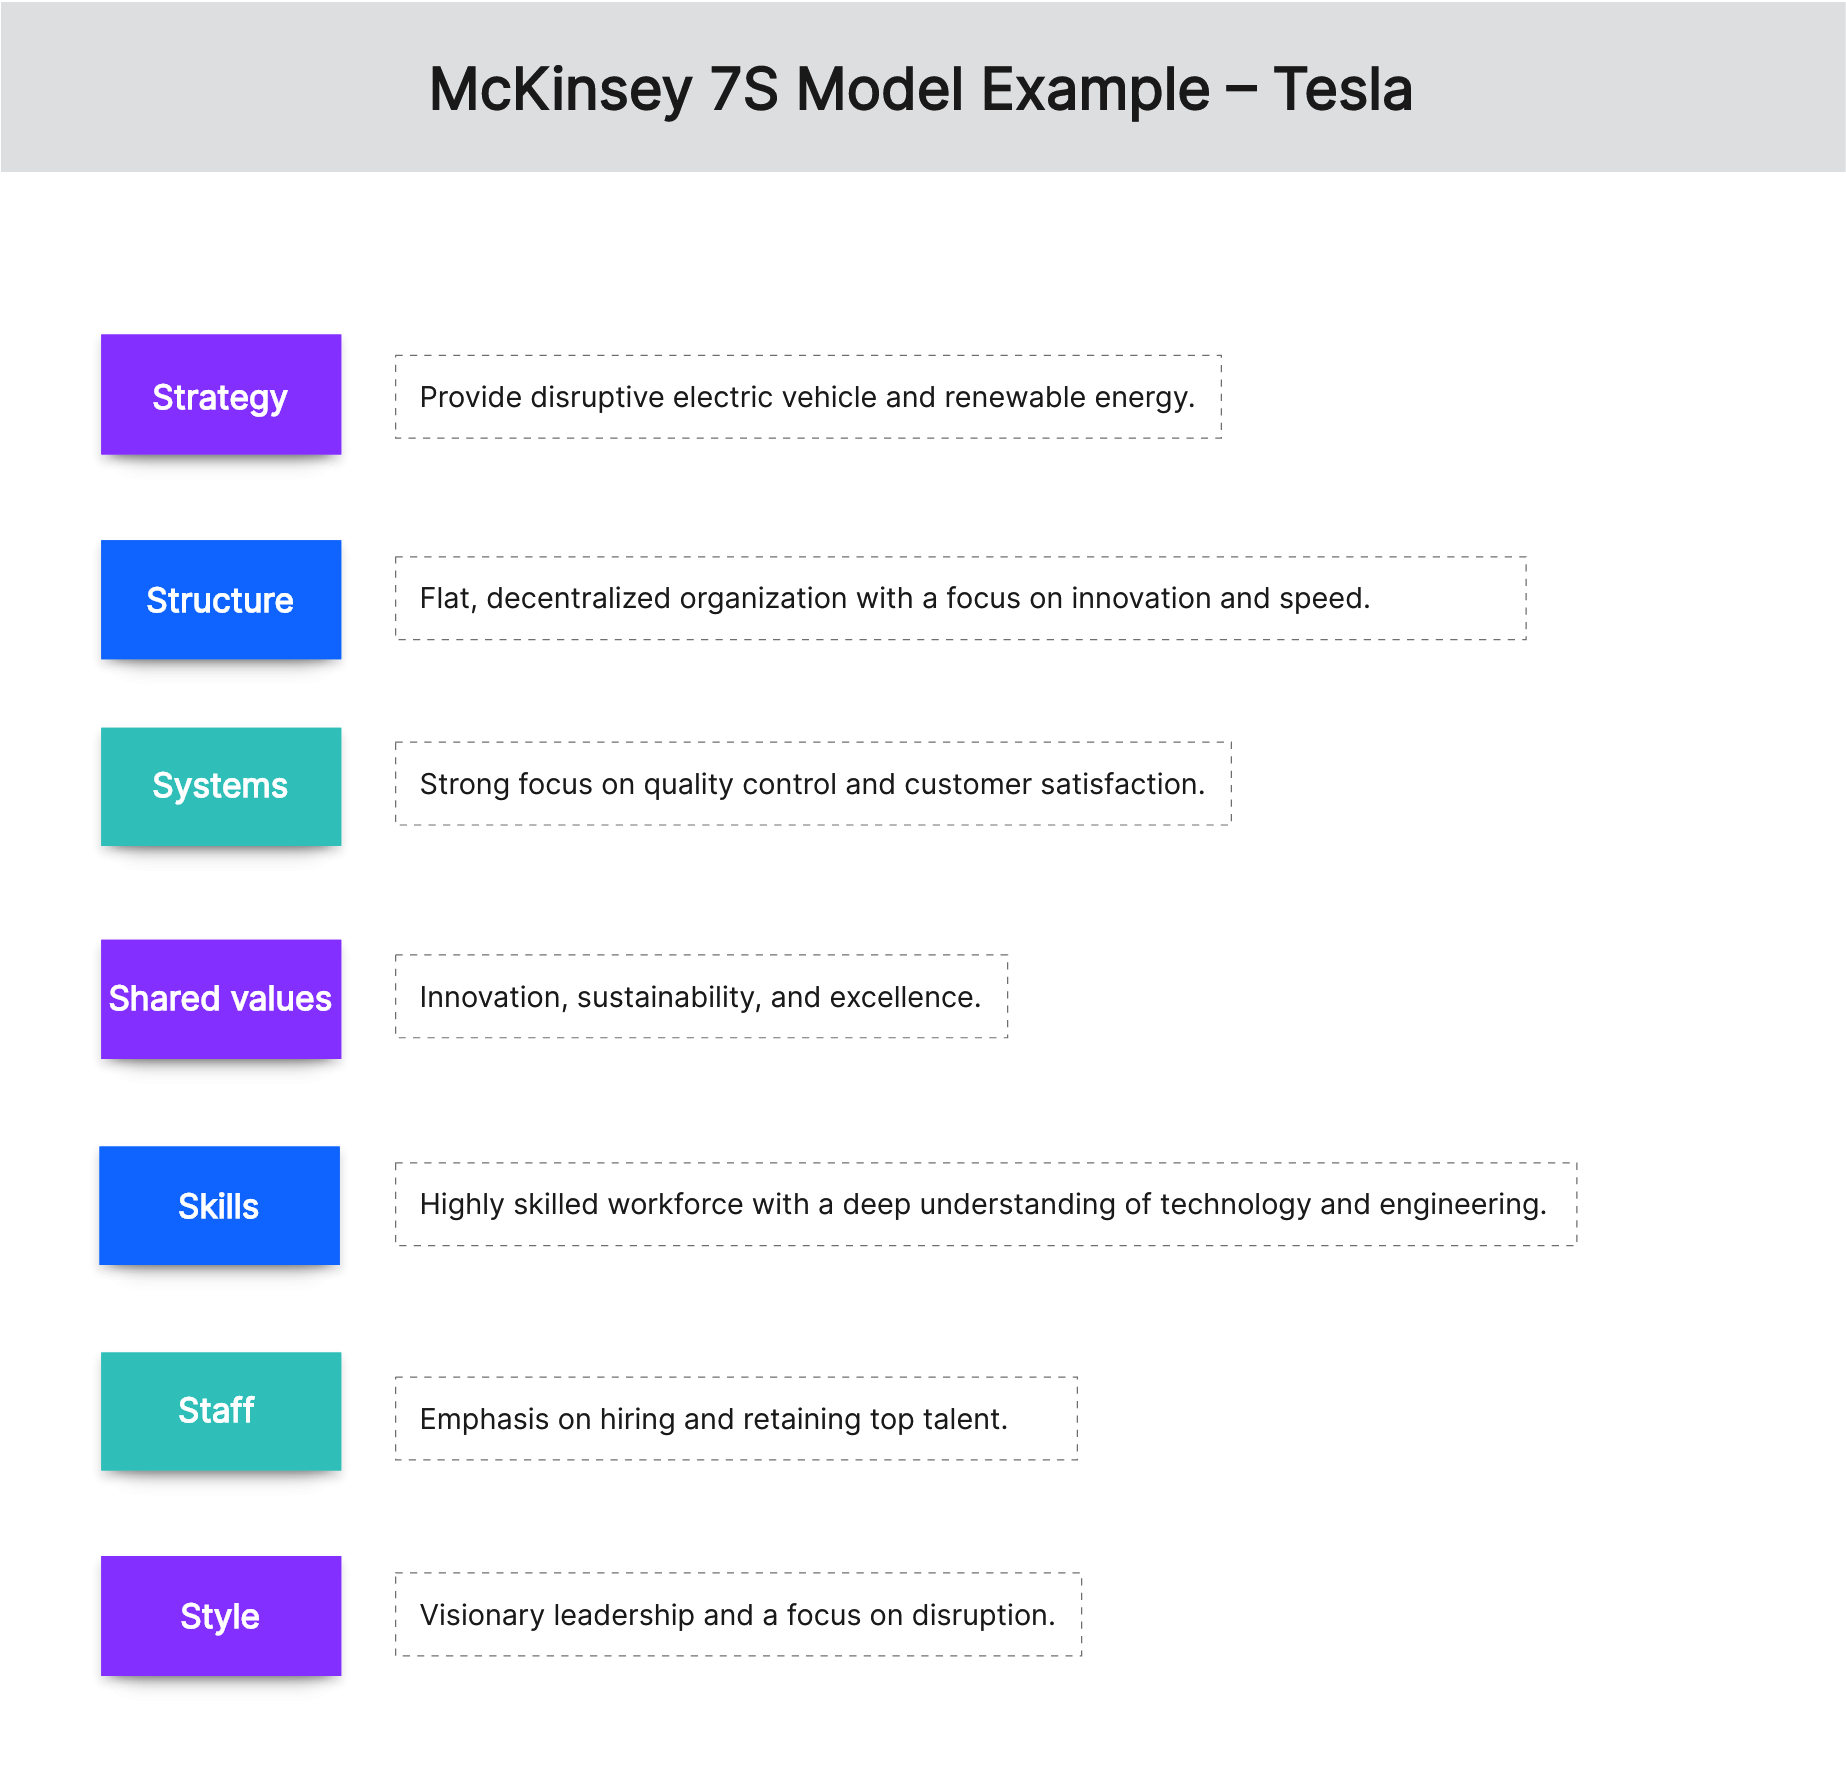 mckinsey-7s-model-example-tesla